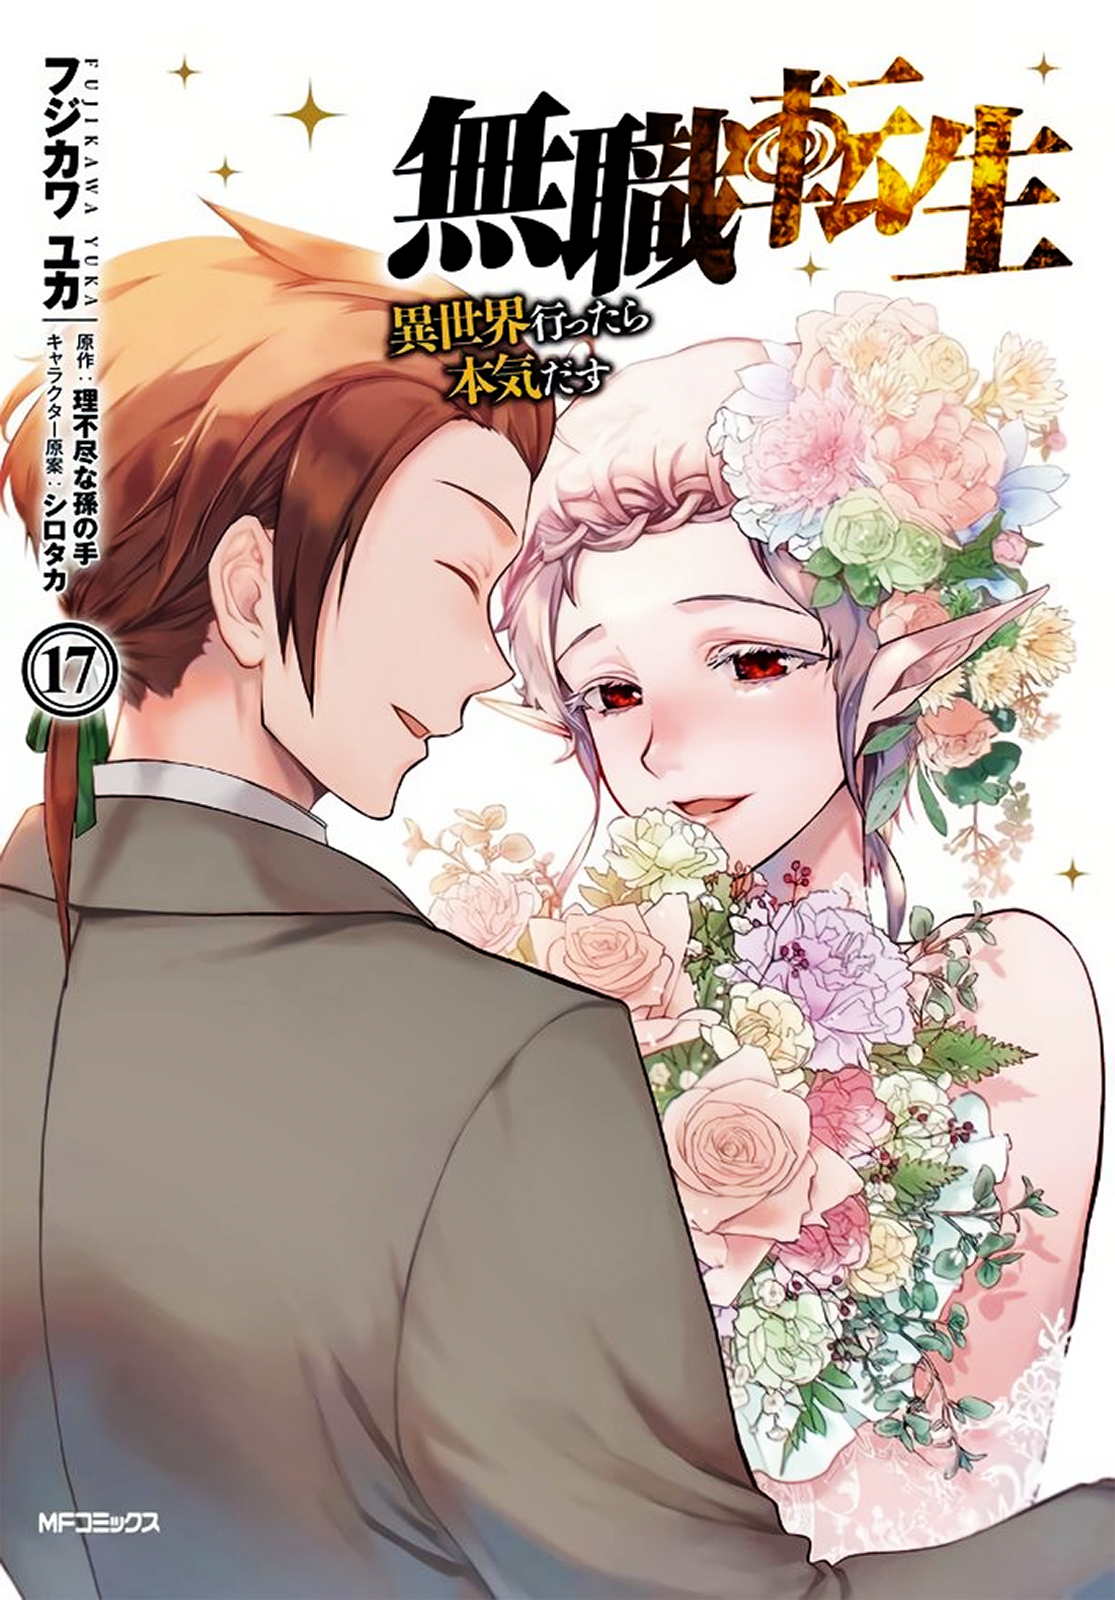 Mushoku Tensei: Isekai Ittara Honki Dasu (Light Novel) - Volumes 1 a 18 -  MangAnime - Download baixar Mangás e HQs em Kindle .mobi e outros formatos  .pdf mangás para kindle